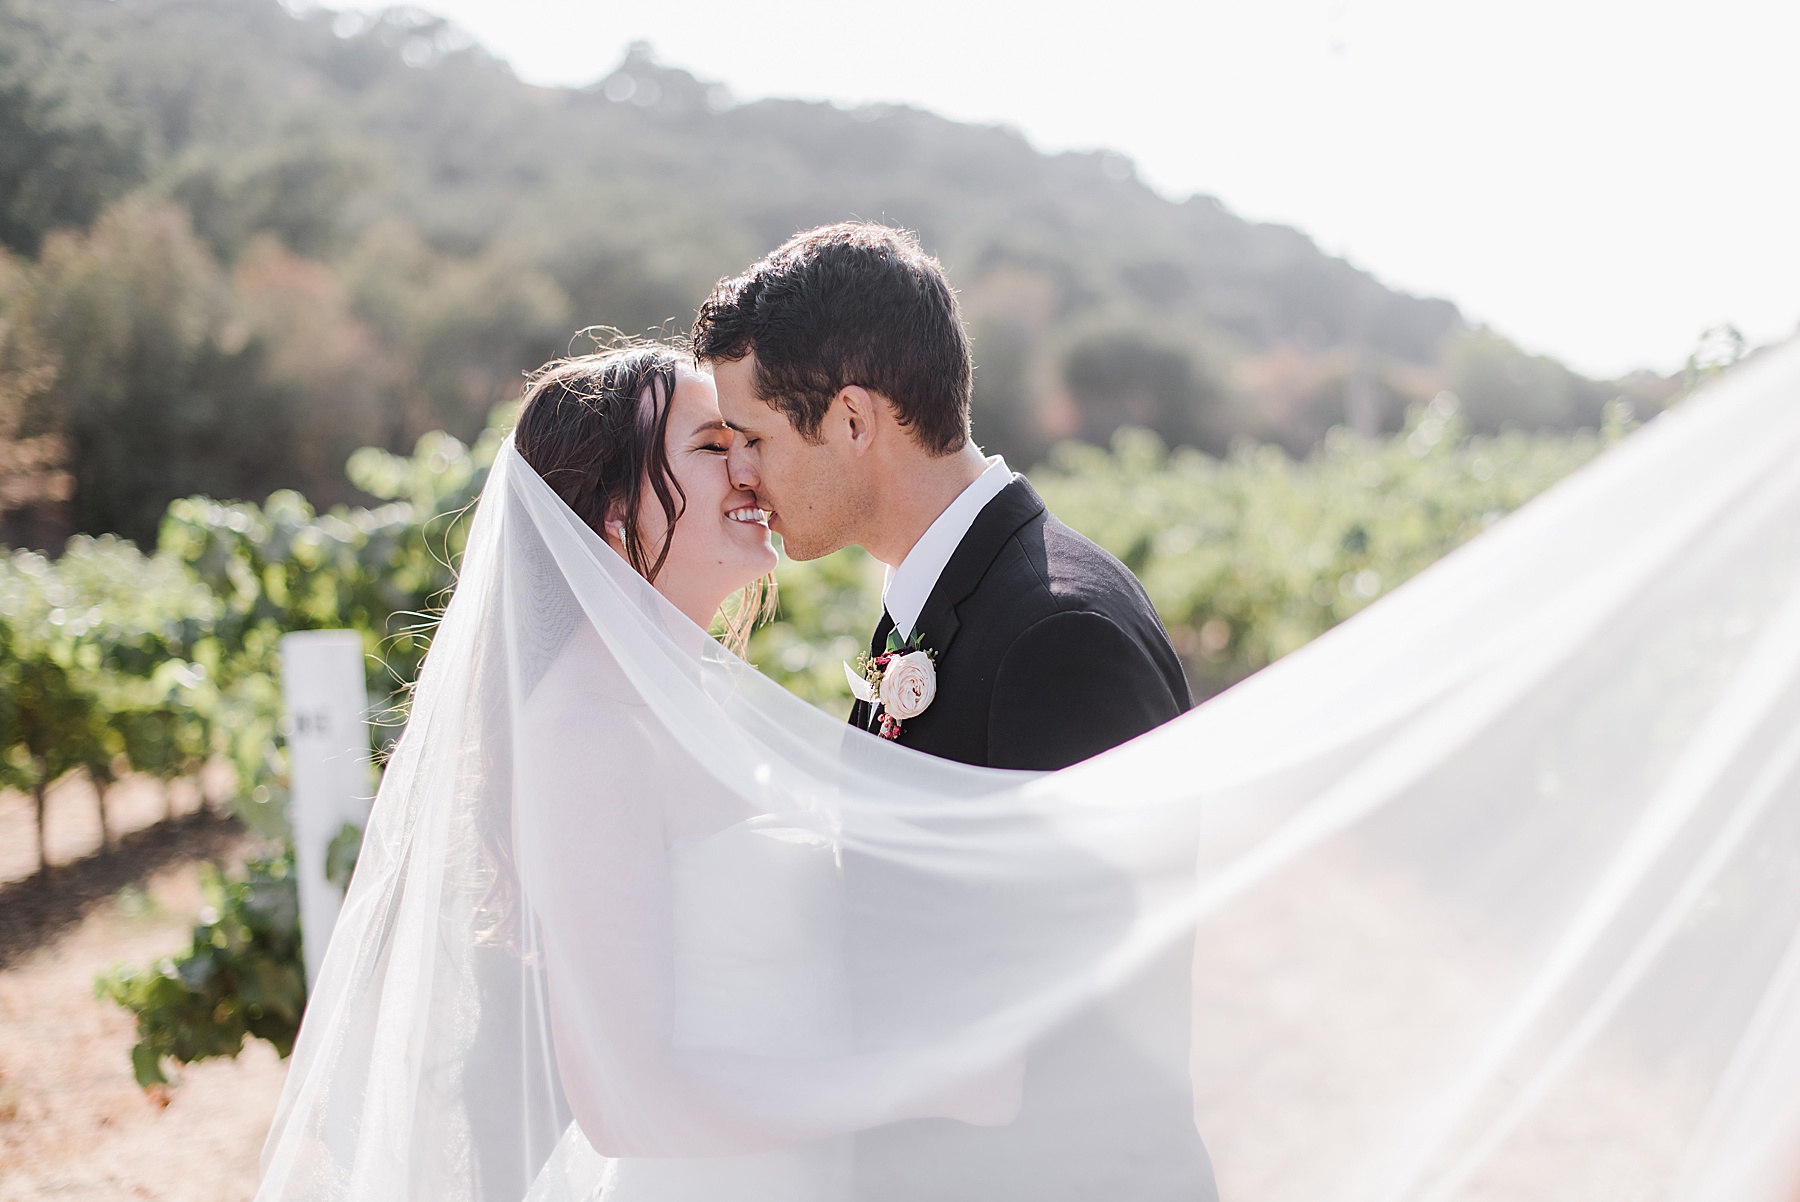 Riverbench Vineyard & Winery Luxury Fall Wedding in Santa Maria, California